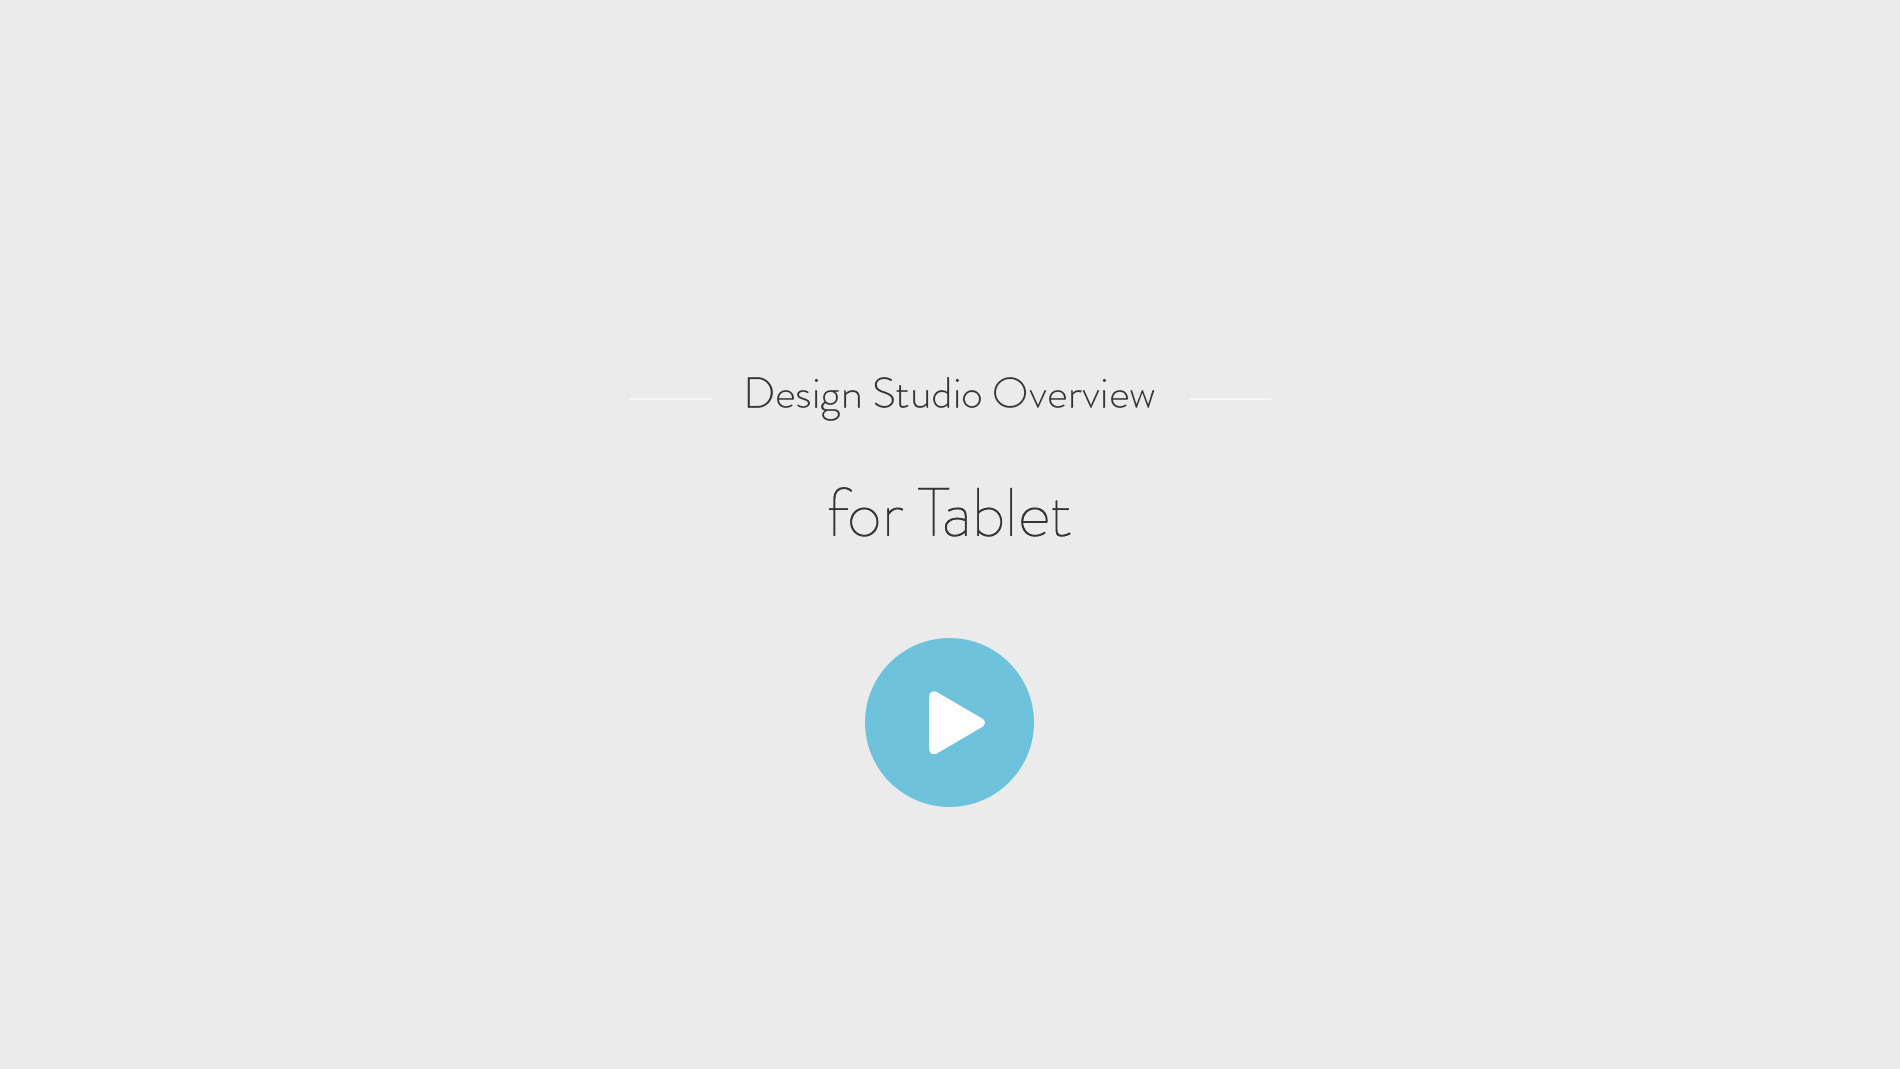 Design Studio Overview - for Tablet